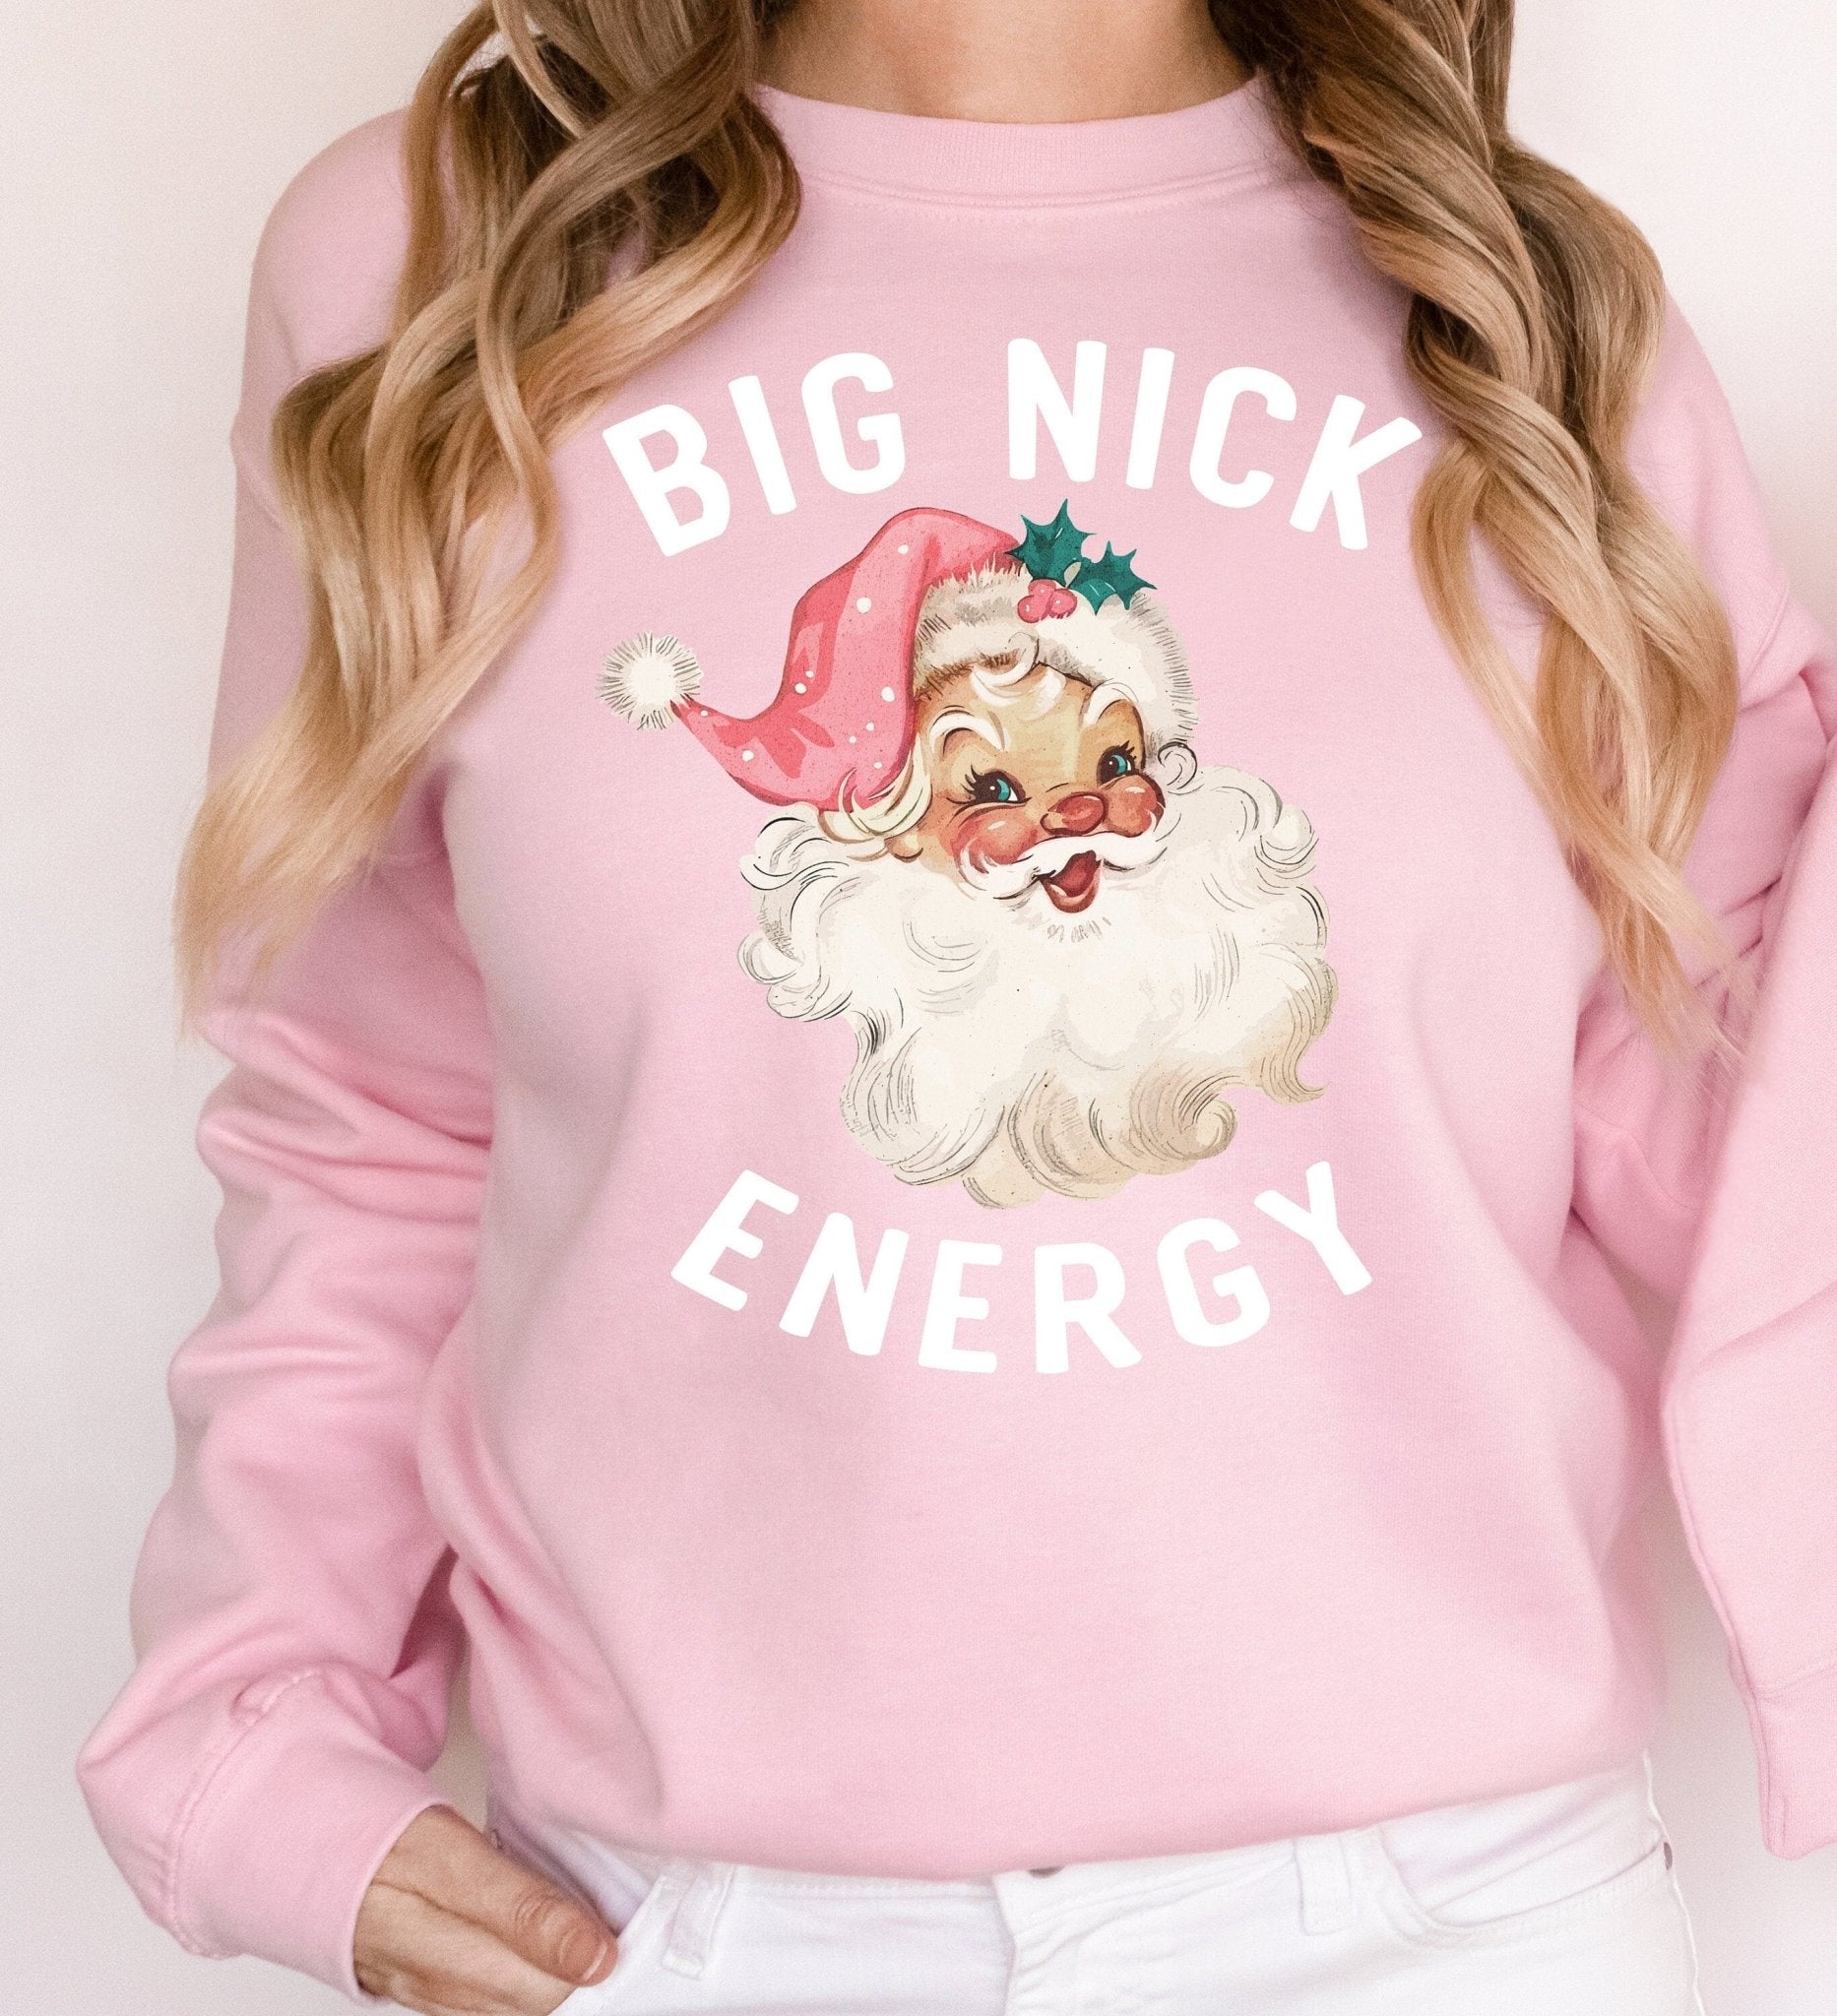 Funny Big Nick Energy Vintage Santa Christmas Sweatshirt Top - Squishy Cheeks